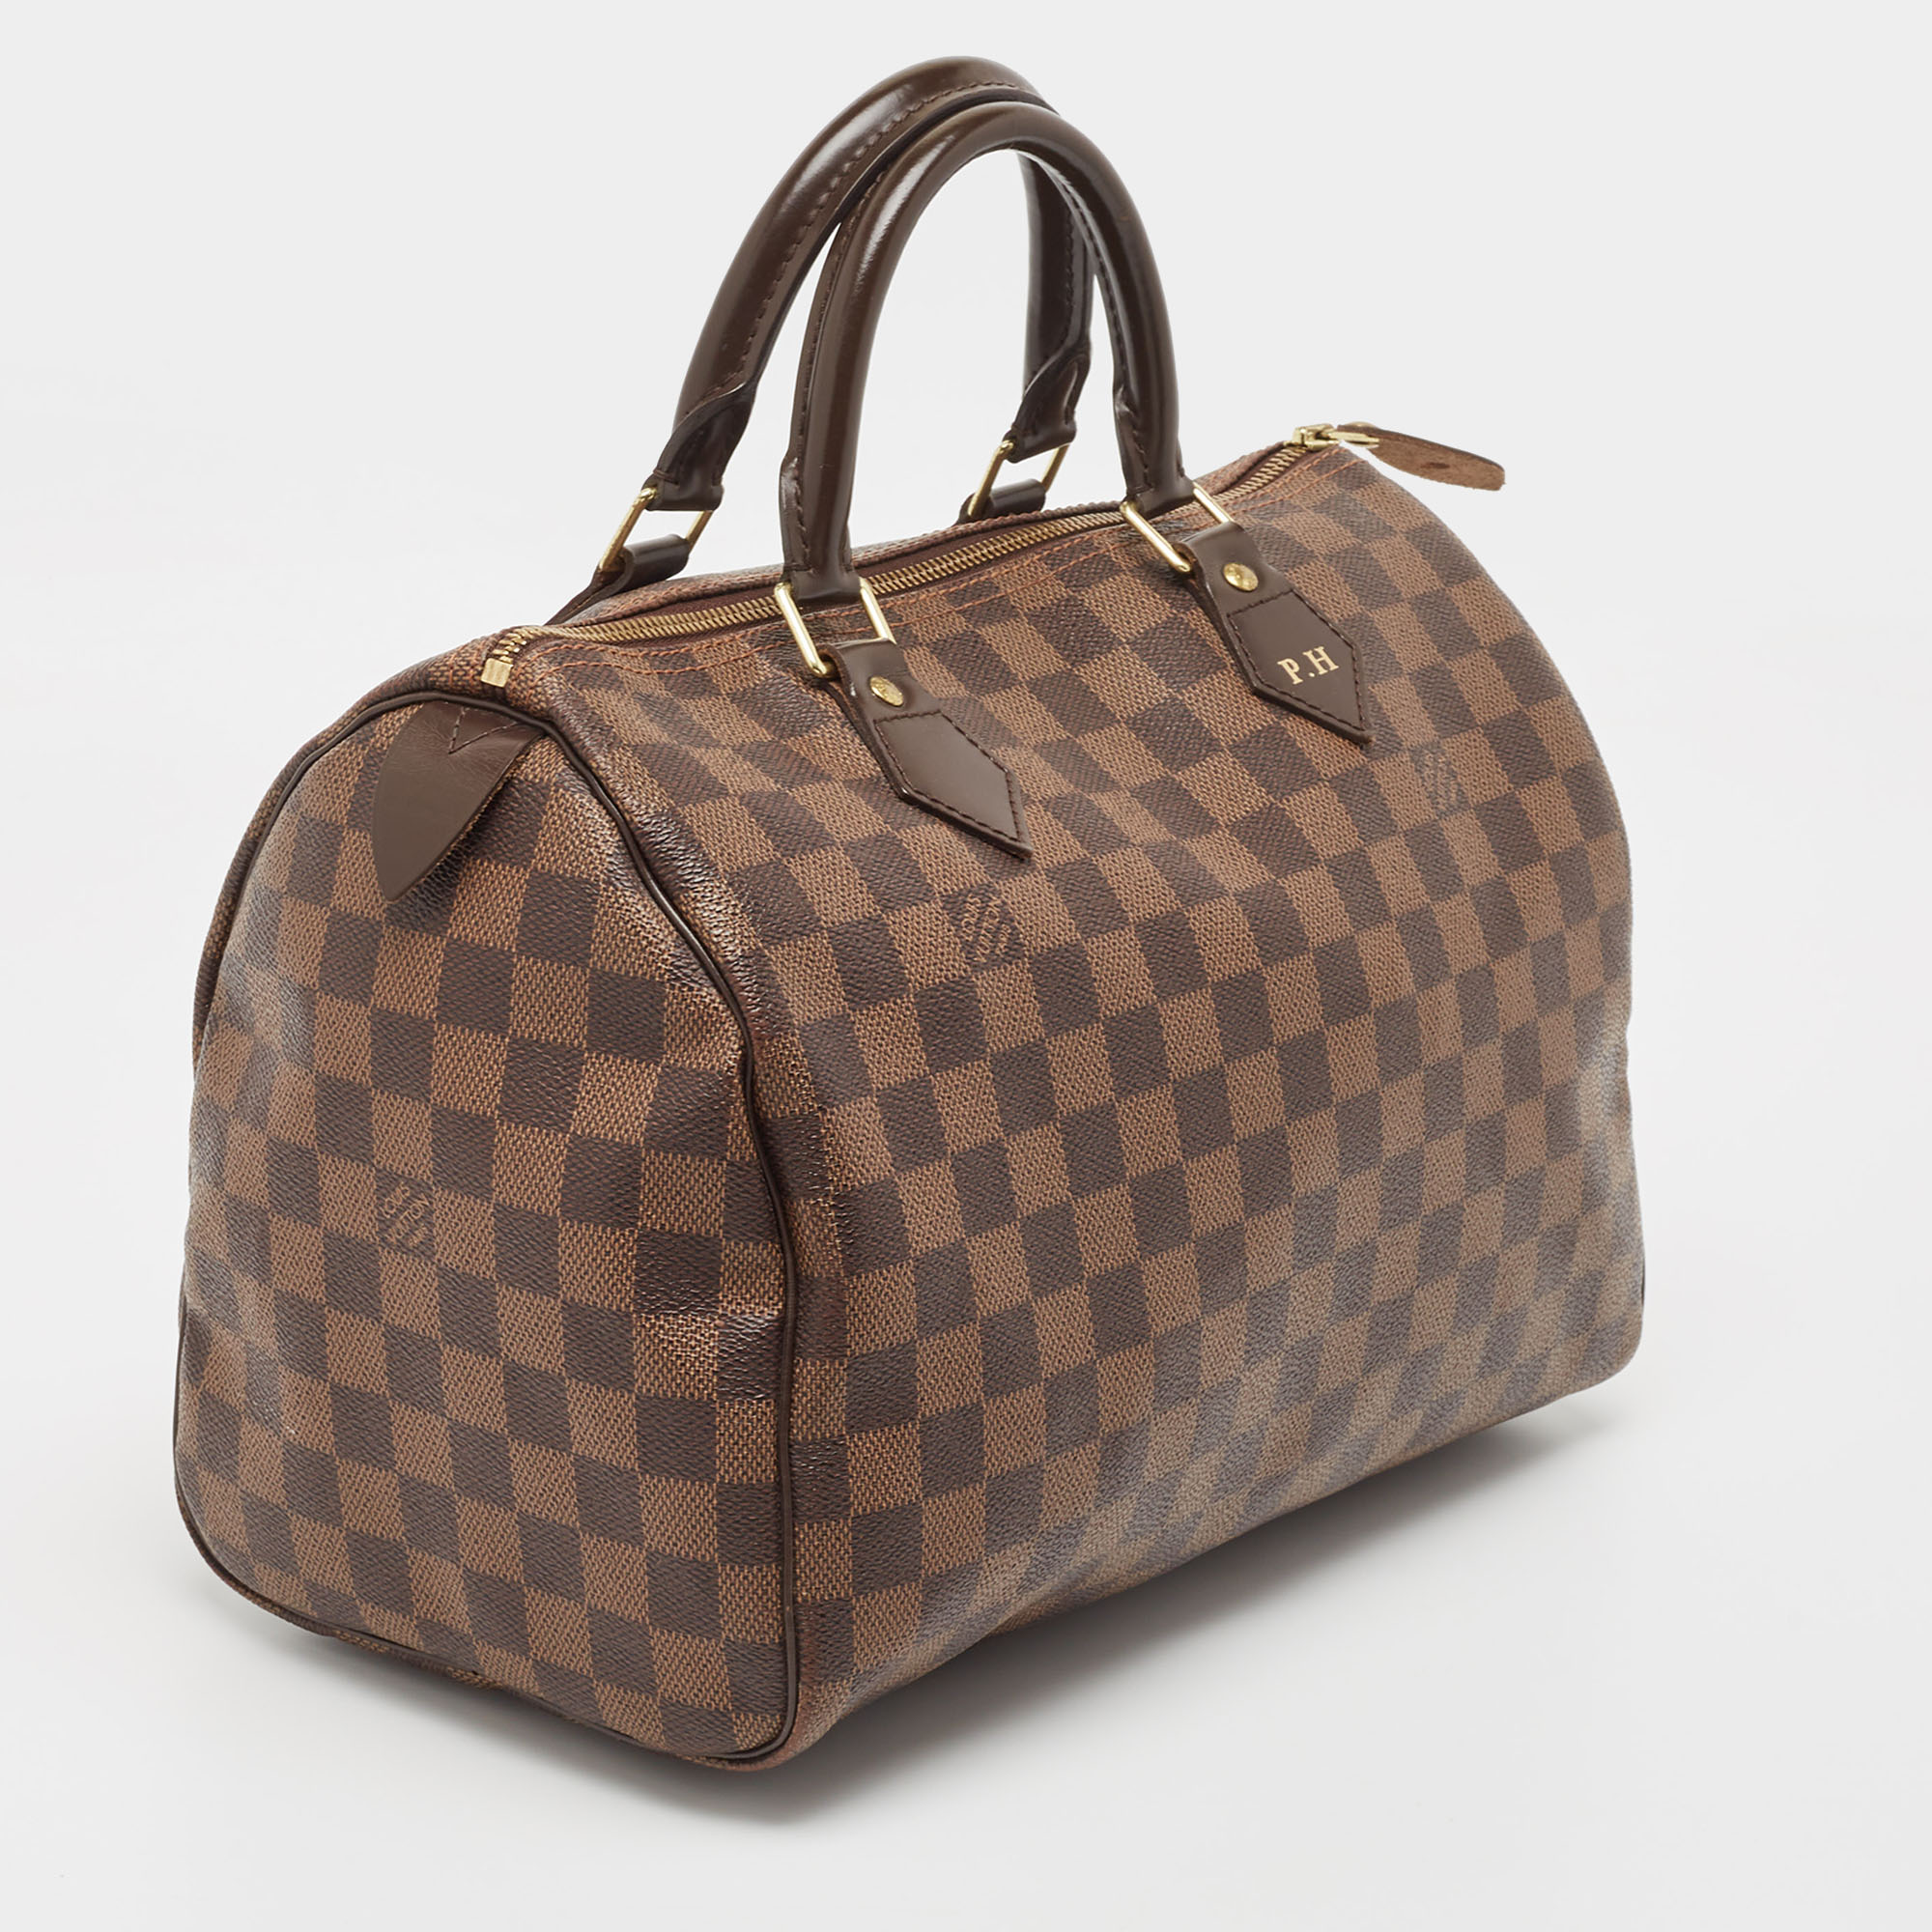 Louis Vuitton Damier Ebene Canvas Speedy 30 Bag